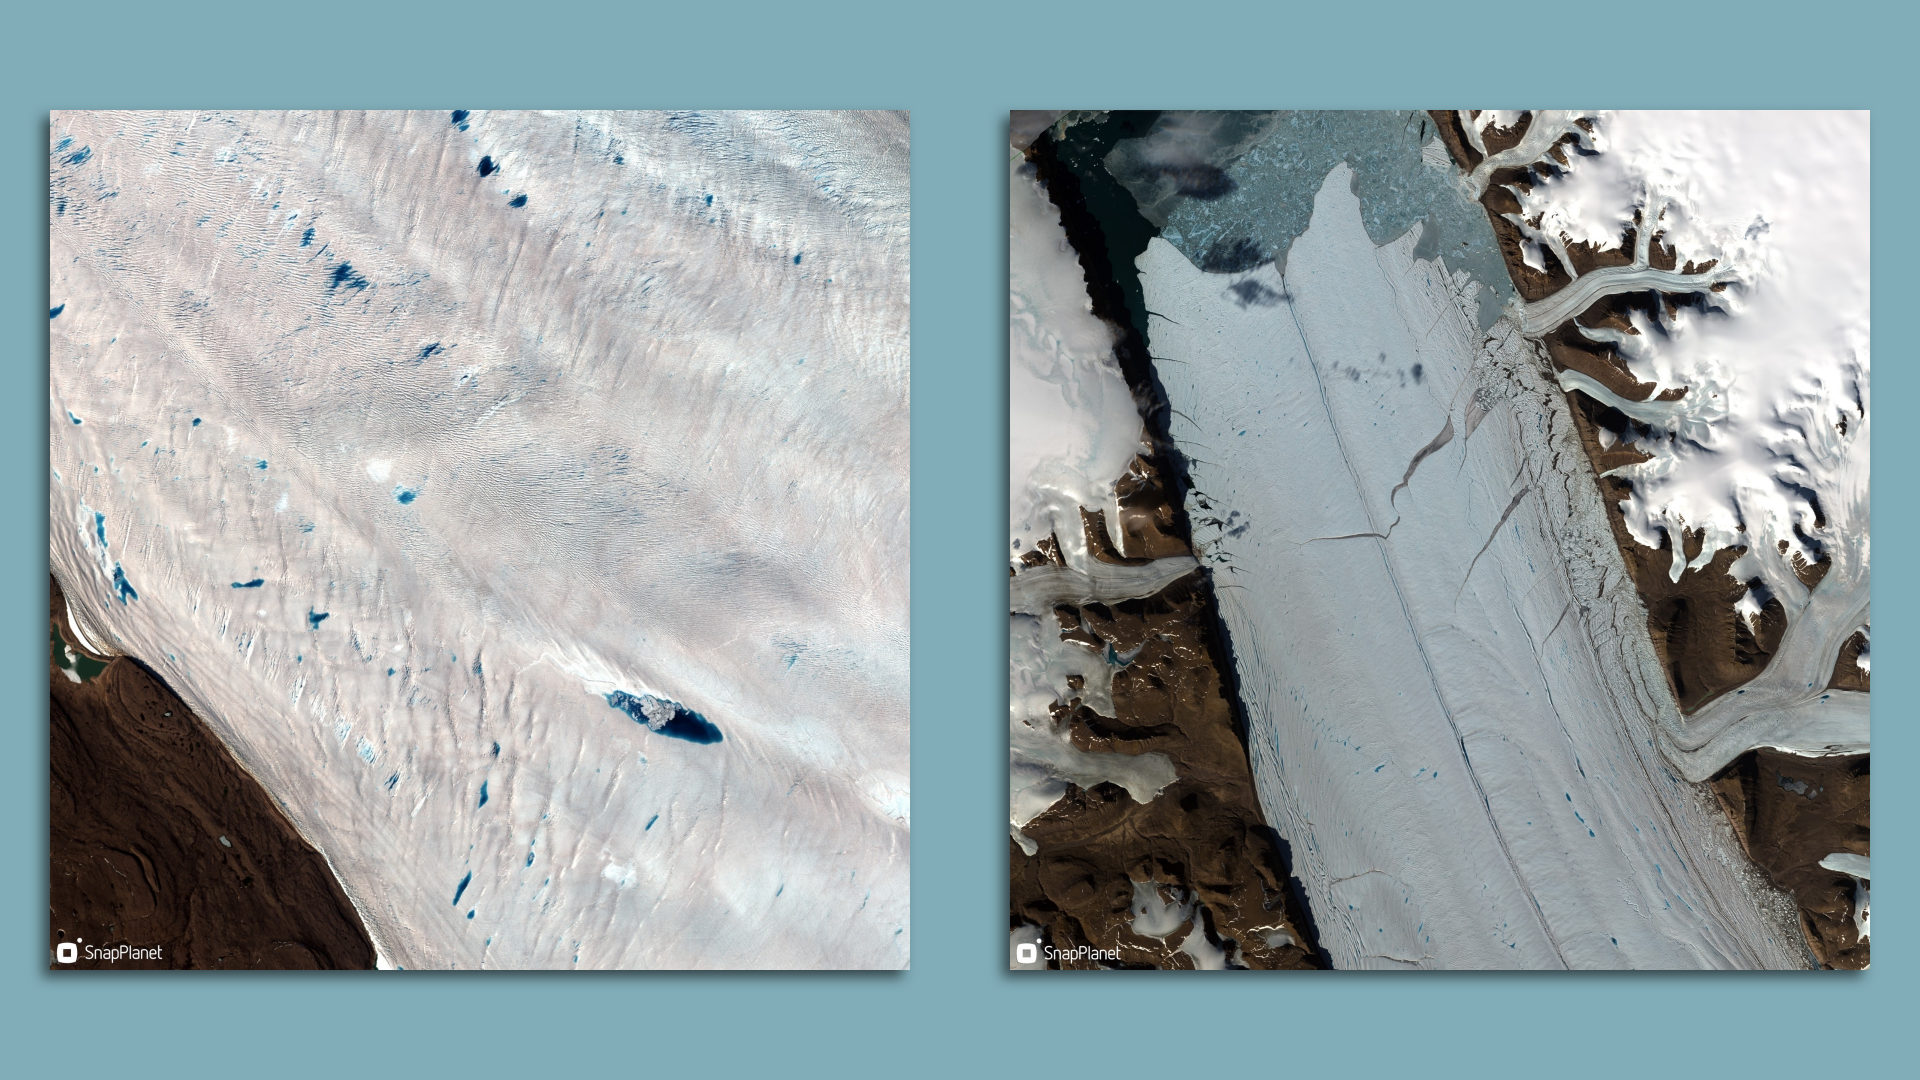 Satellite image of a glacier with bright blue melt ponds.